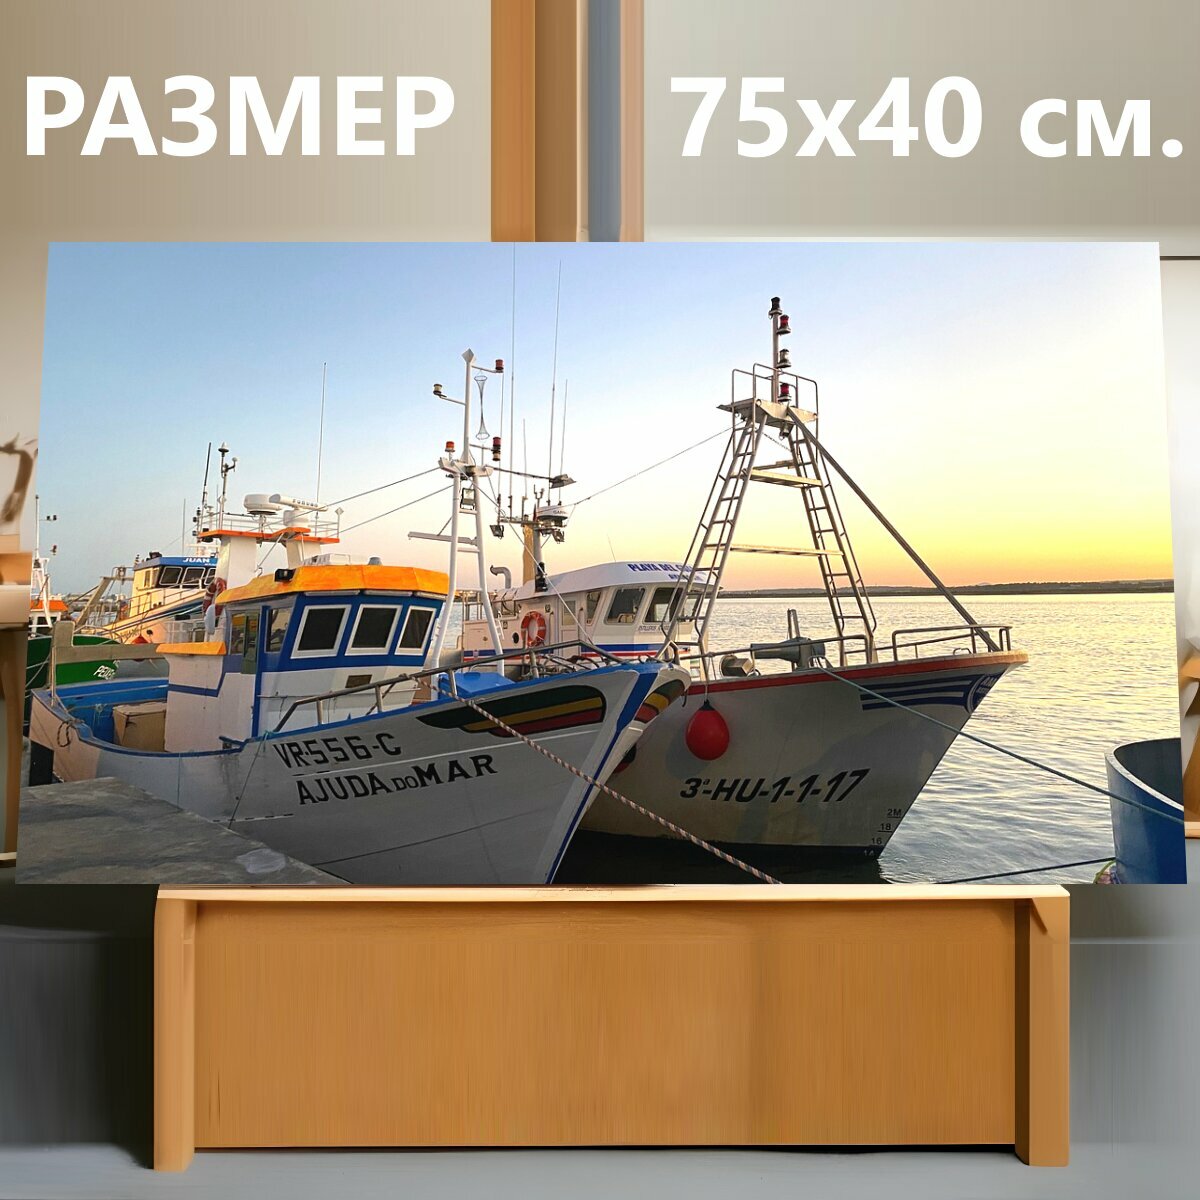 Картина на холсте "Лодка, судно, море" на подрамнике 75х40 см. для интерьера